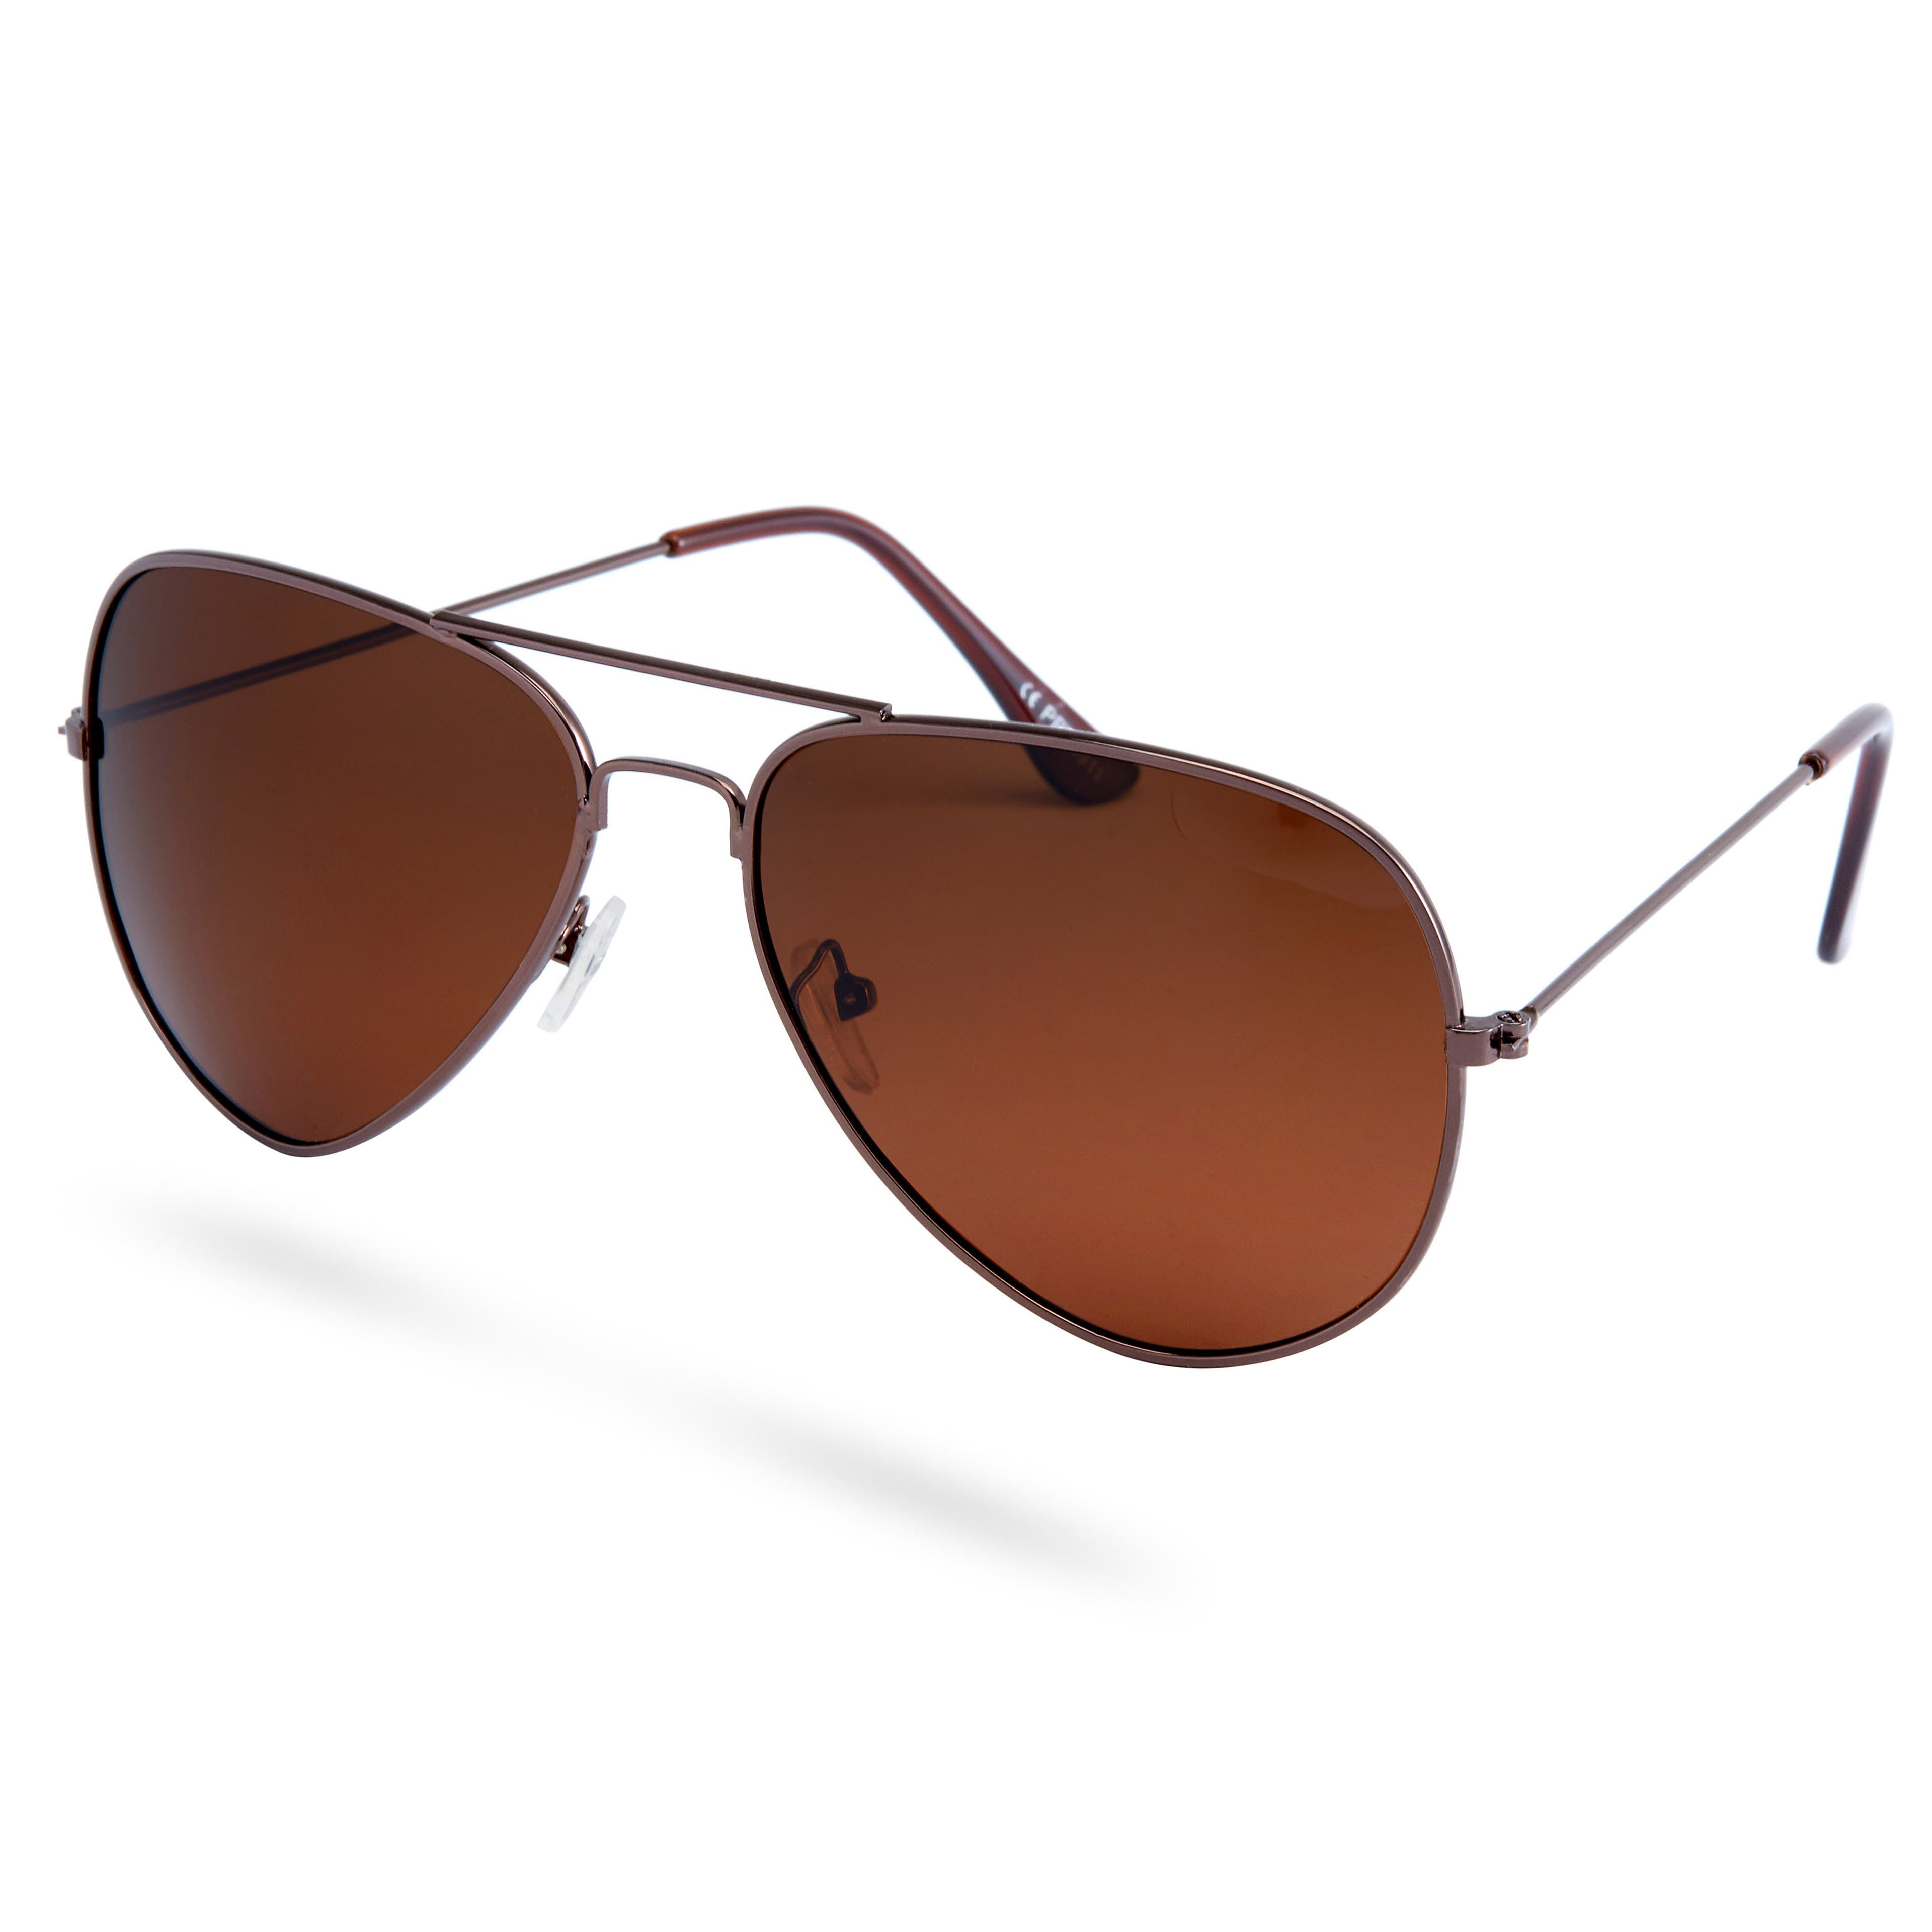 Поляризирани авиаторски слънчеви очила в кафяво